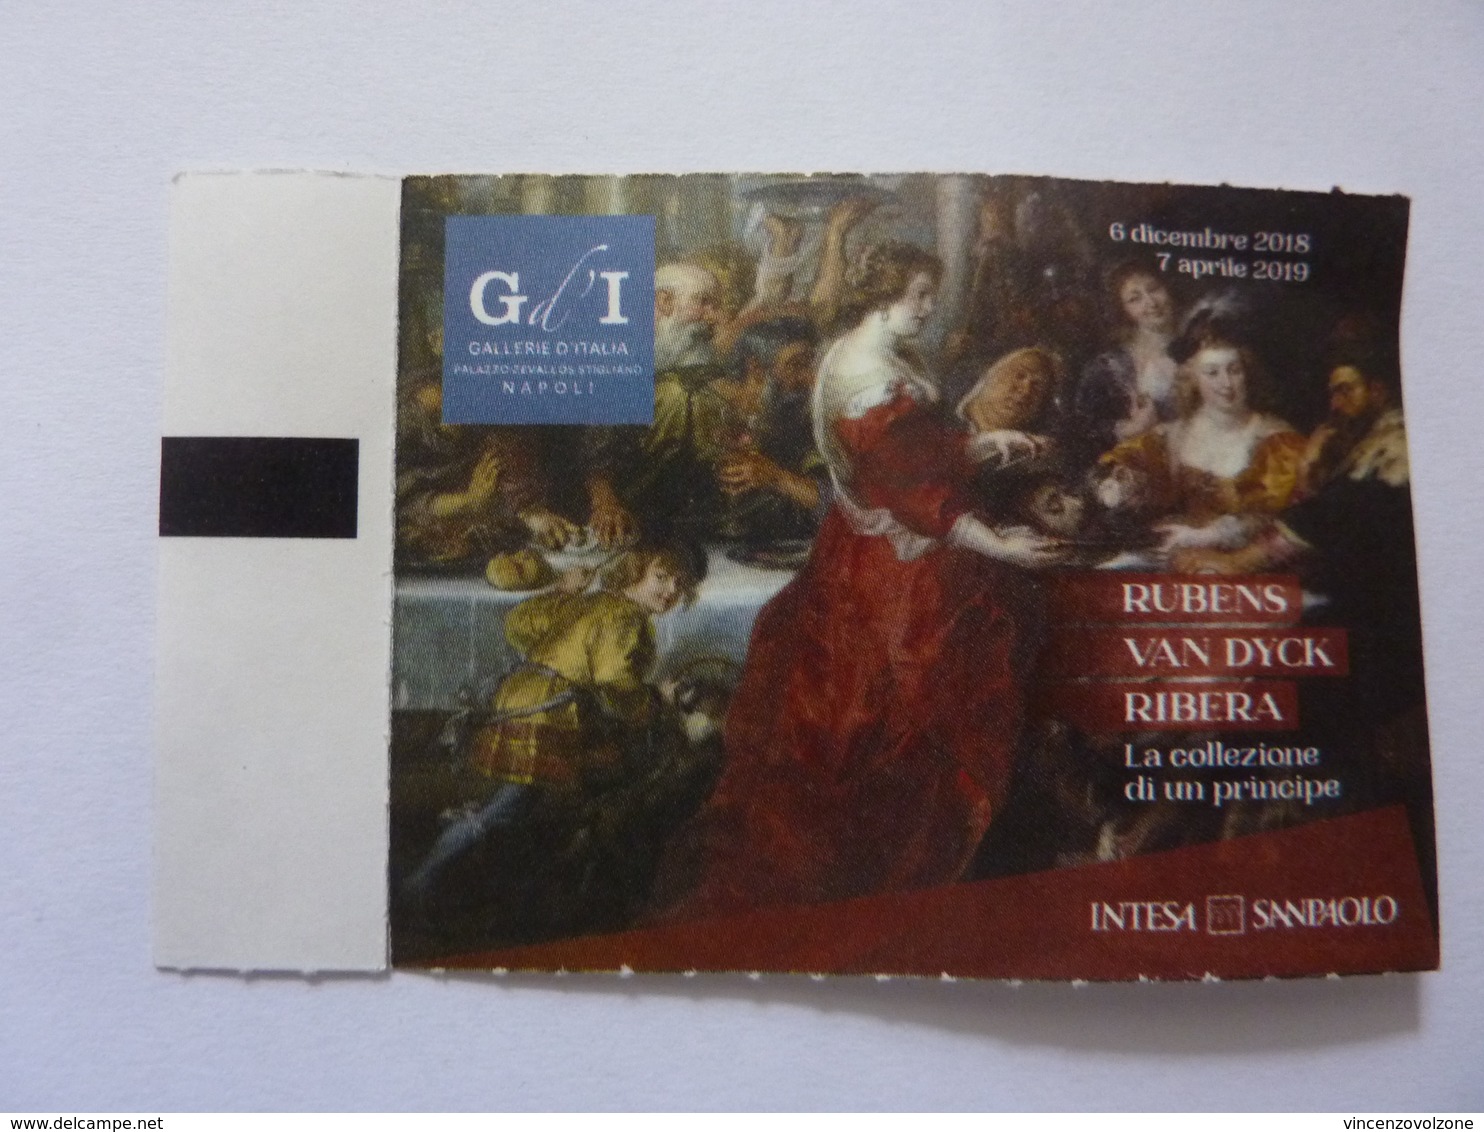 Biglietto Ingresso Mostra "Gallerie D'italia Palazzo Zevallos Stigliano - Napoli RUBENS VAKN DYCK RIBEIRA" 2019 - Eintrittskarten